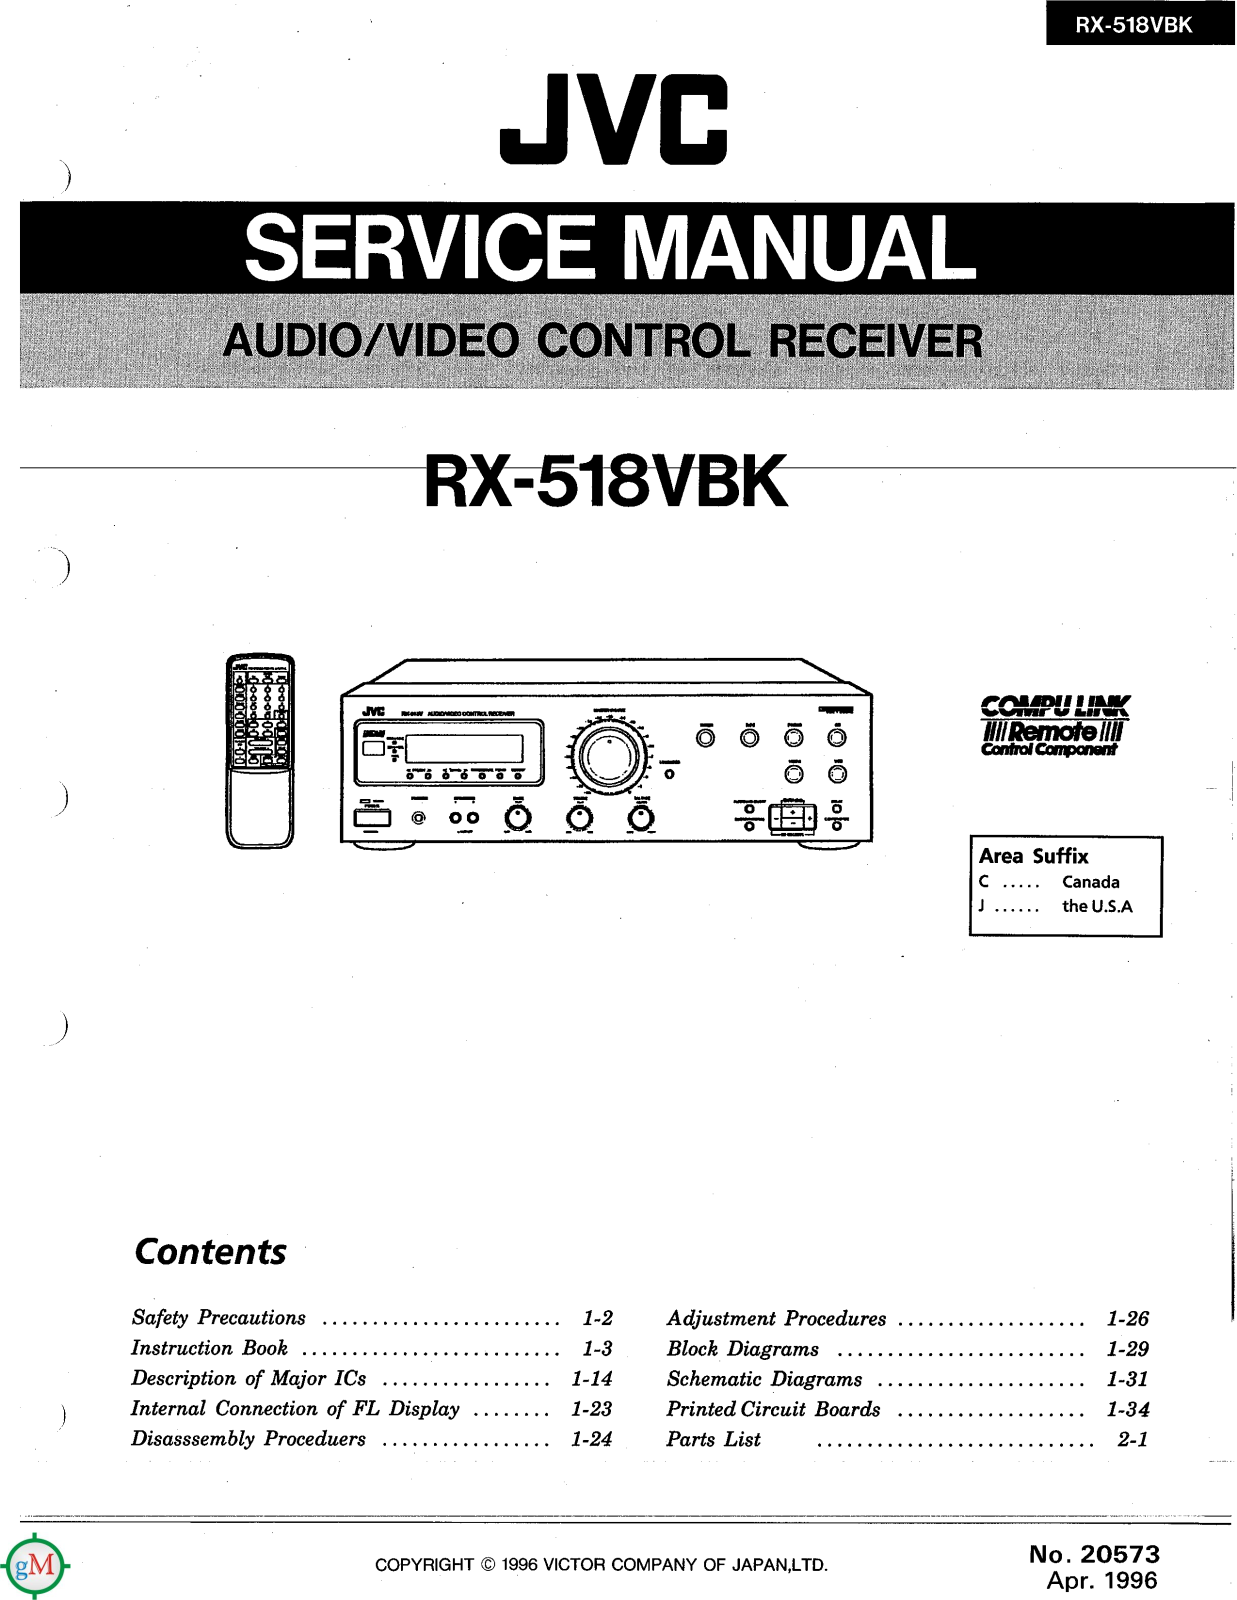 JVC RX-518-VBK Service manual